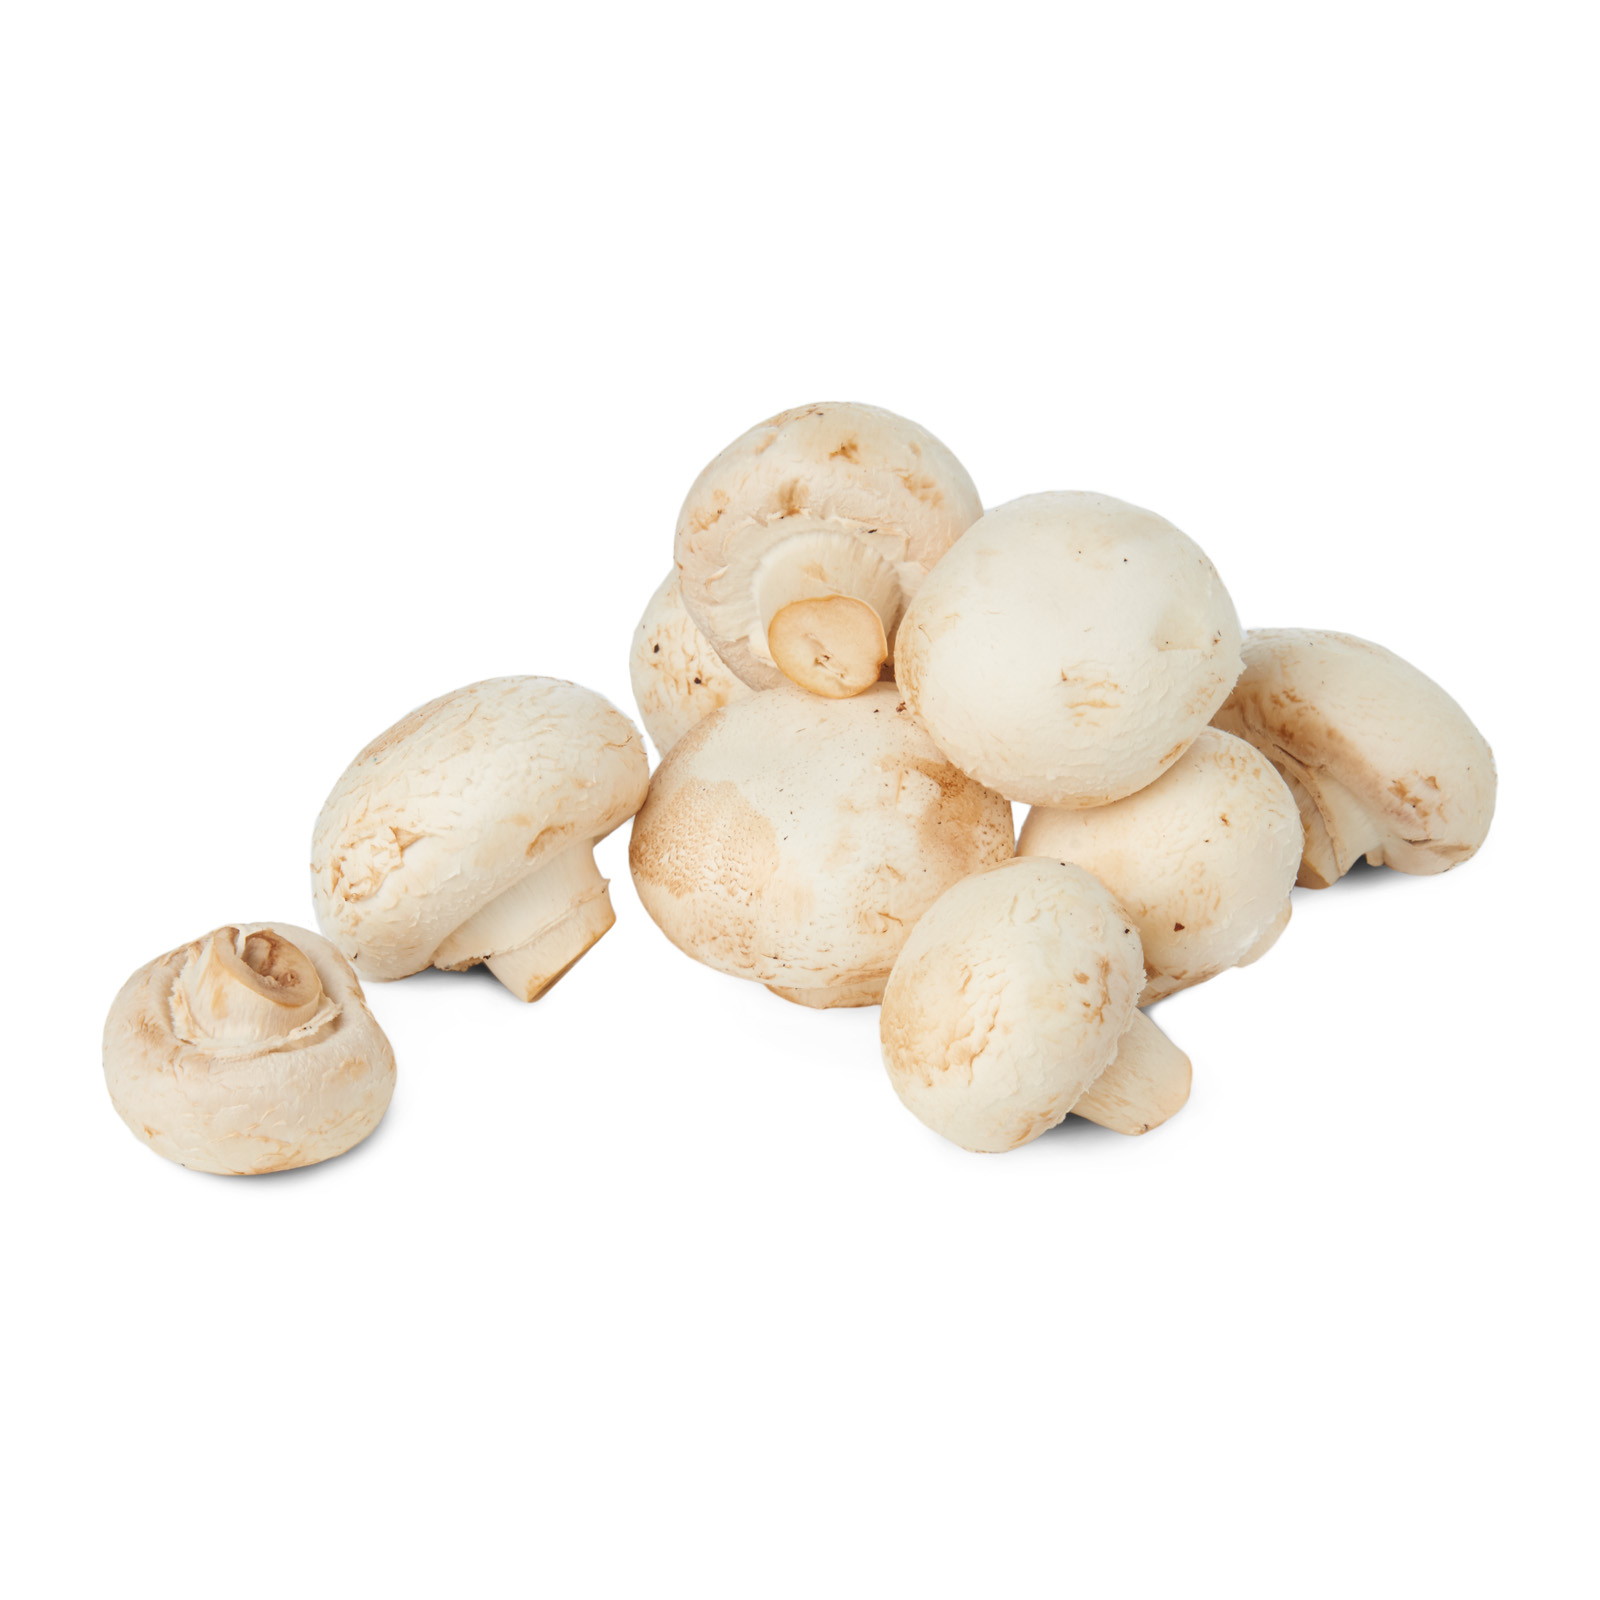 Mushroom Gourmet White Button Mushrooms 250g - from RedMart